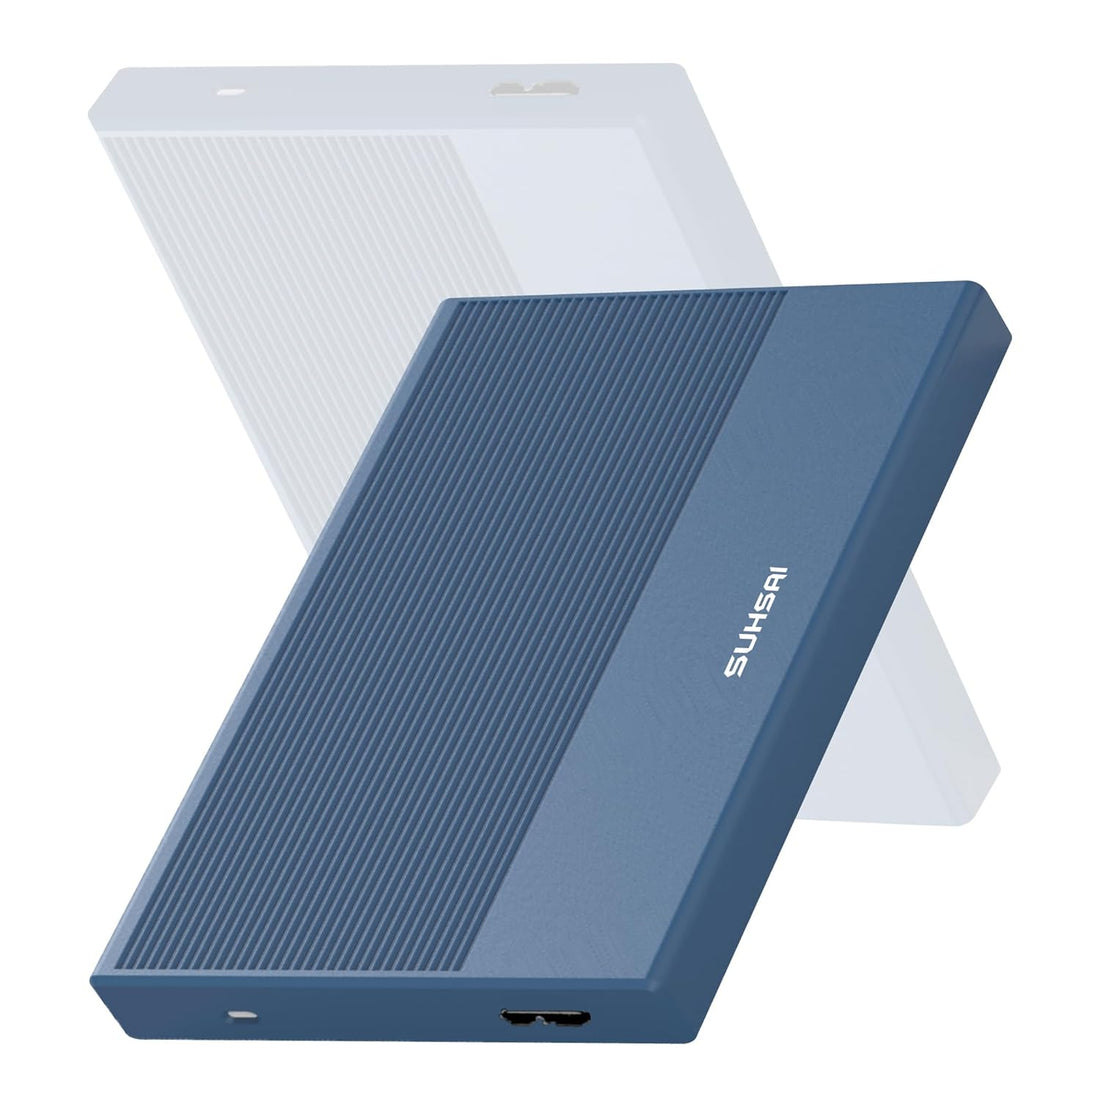 SUHSAI External Hard Drive 100GB USB 3.0 Portable Hard Disk Storage & Memory Expansion HDD, Backup External Hard Drive for Laptop Computer, MacBook, and Desktop (Navy Blue)